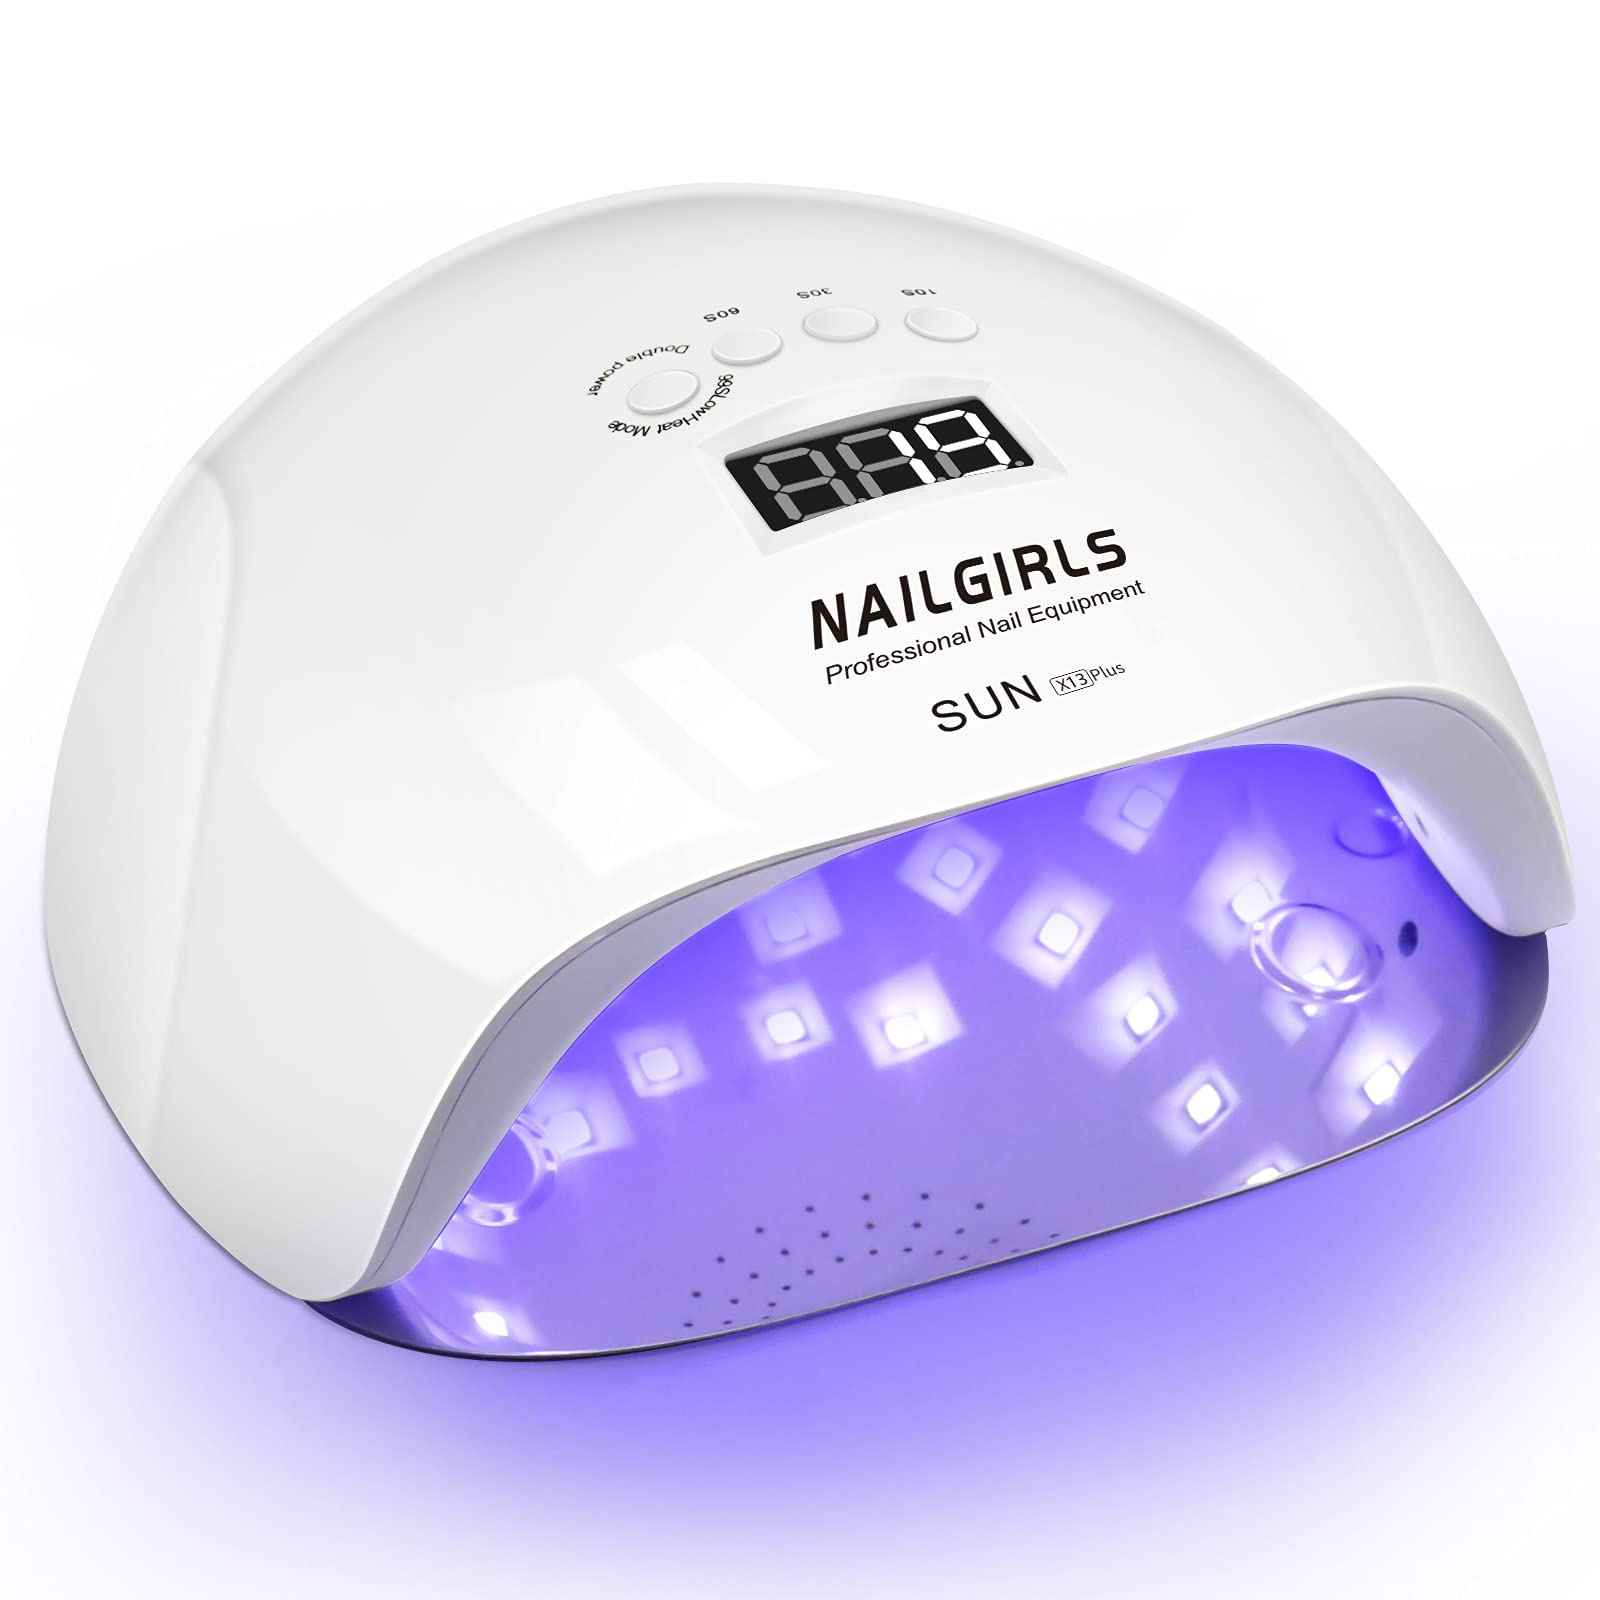 UV LED Nail Lamp For Home Salon,NAILGIRLS Professional 150W Gel Polish Nail Dryer Curing Lamps With 4 Timer Presets,Auto Sensor,Detachable Base,Nail Art Tools for Fingernail and Toenail (White)